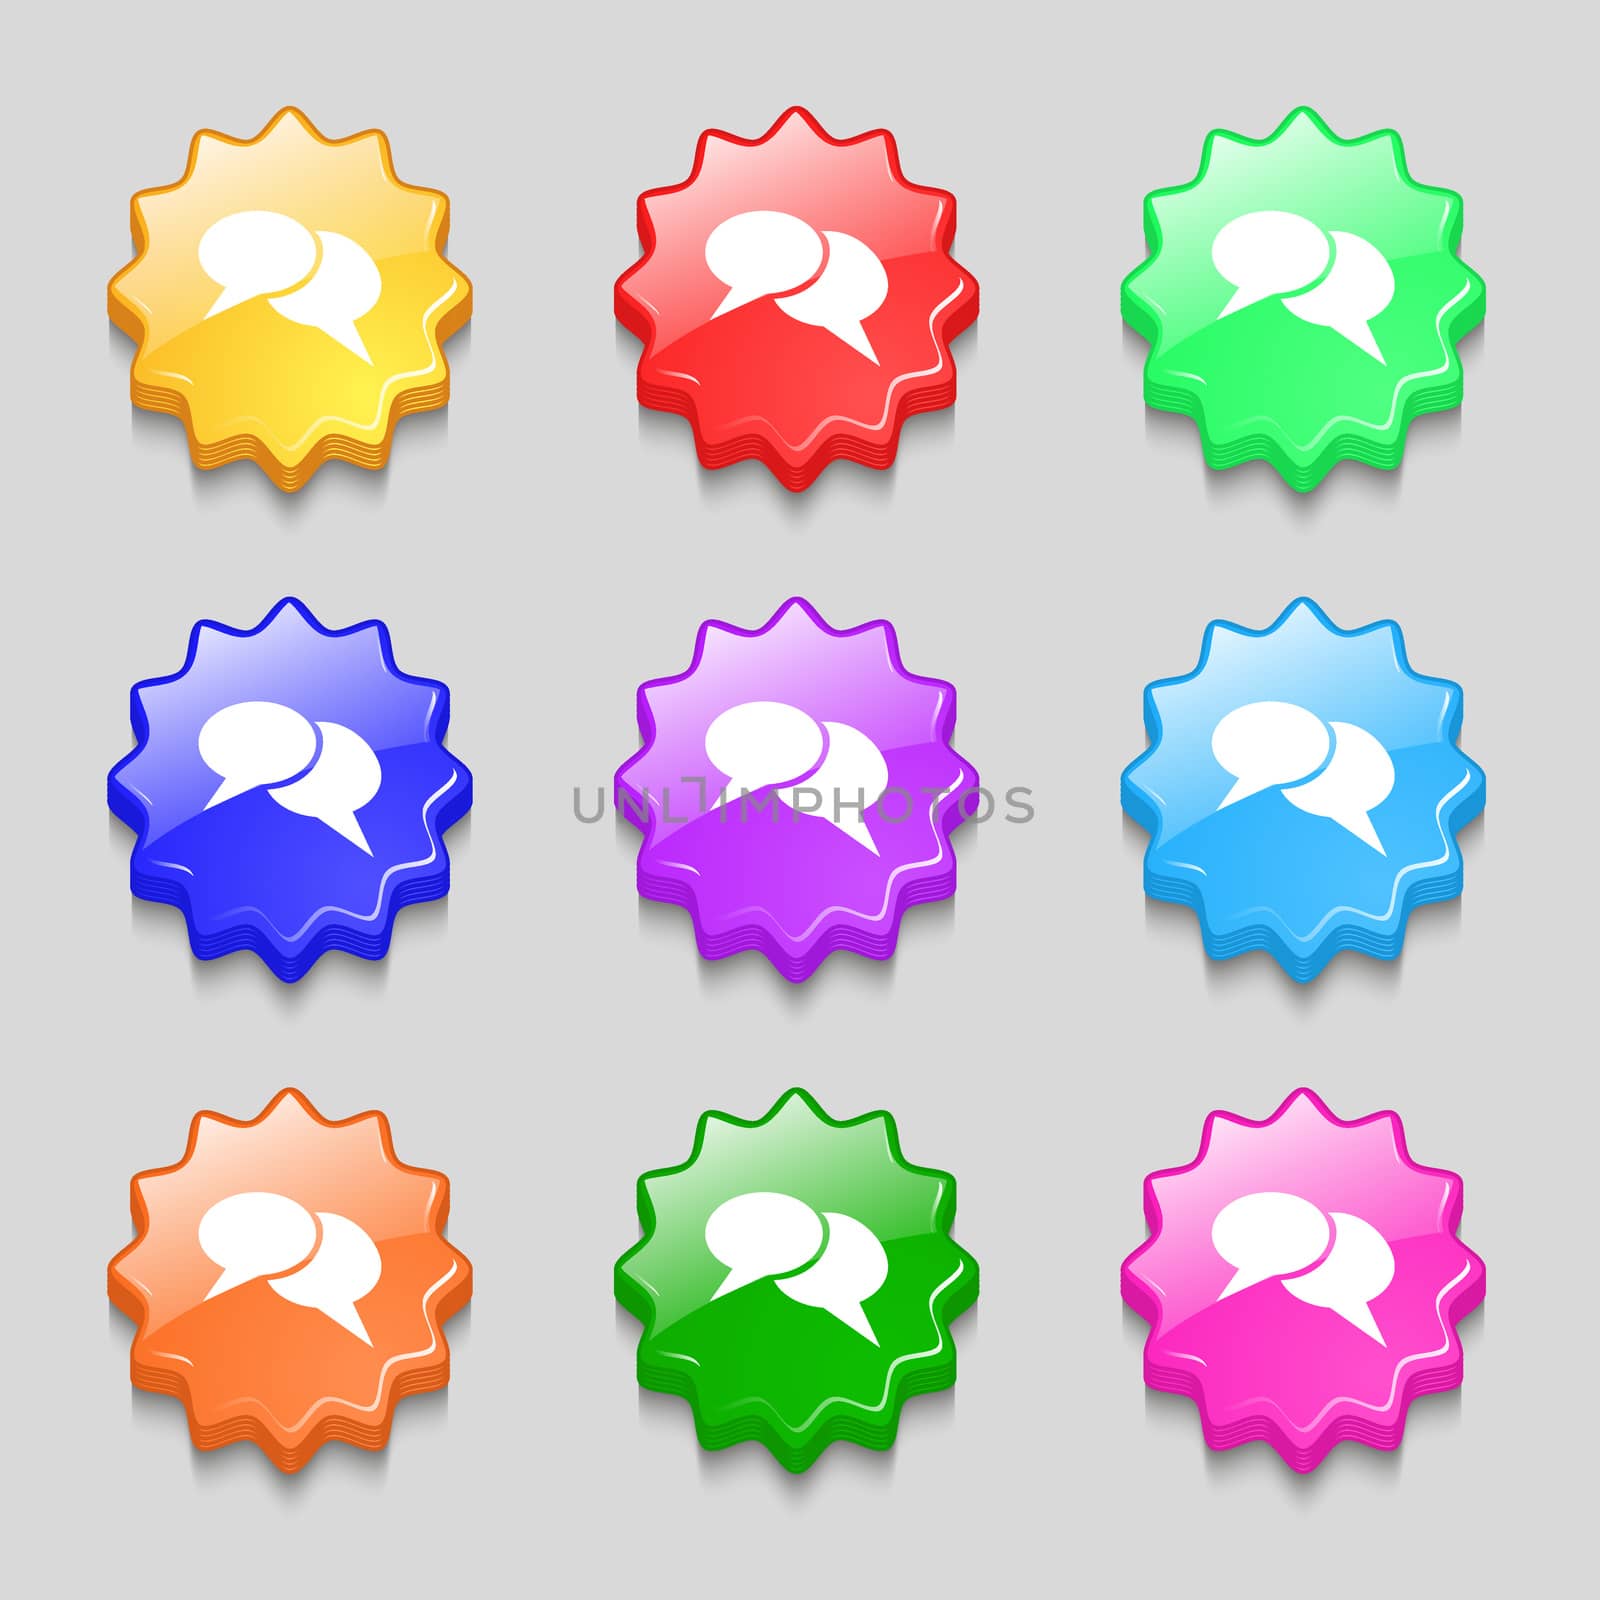 Speech bubble icons. Think cloud symbols. Symbols on nine wavy colourful buttons. illustration